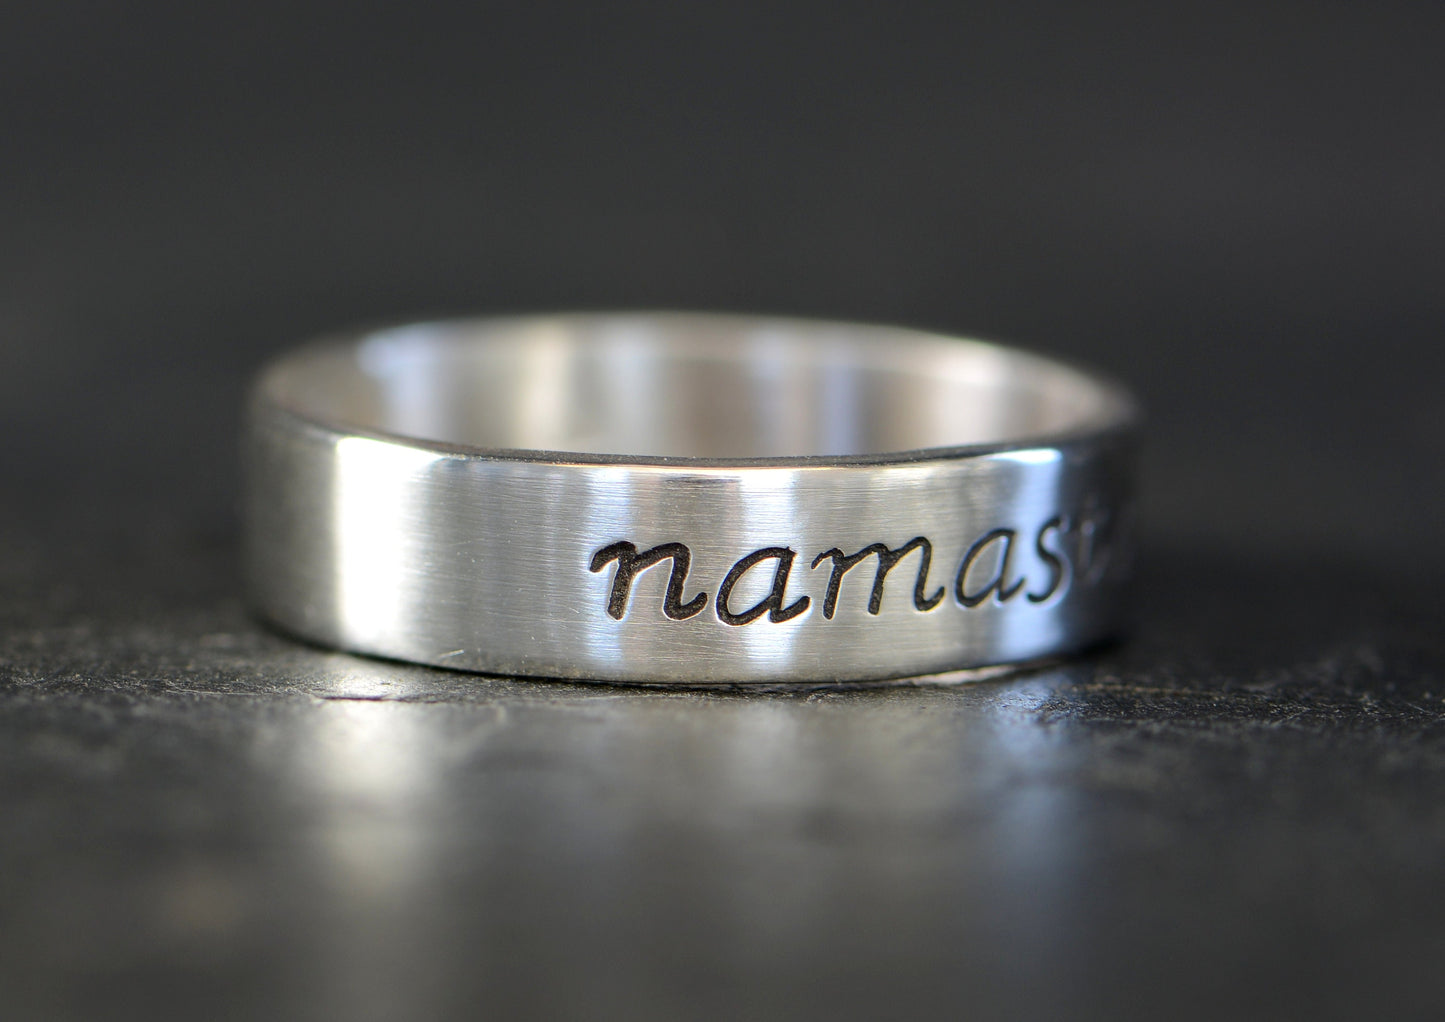 Namaste Sterling Silver Ring - Yoga Inspired